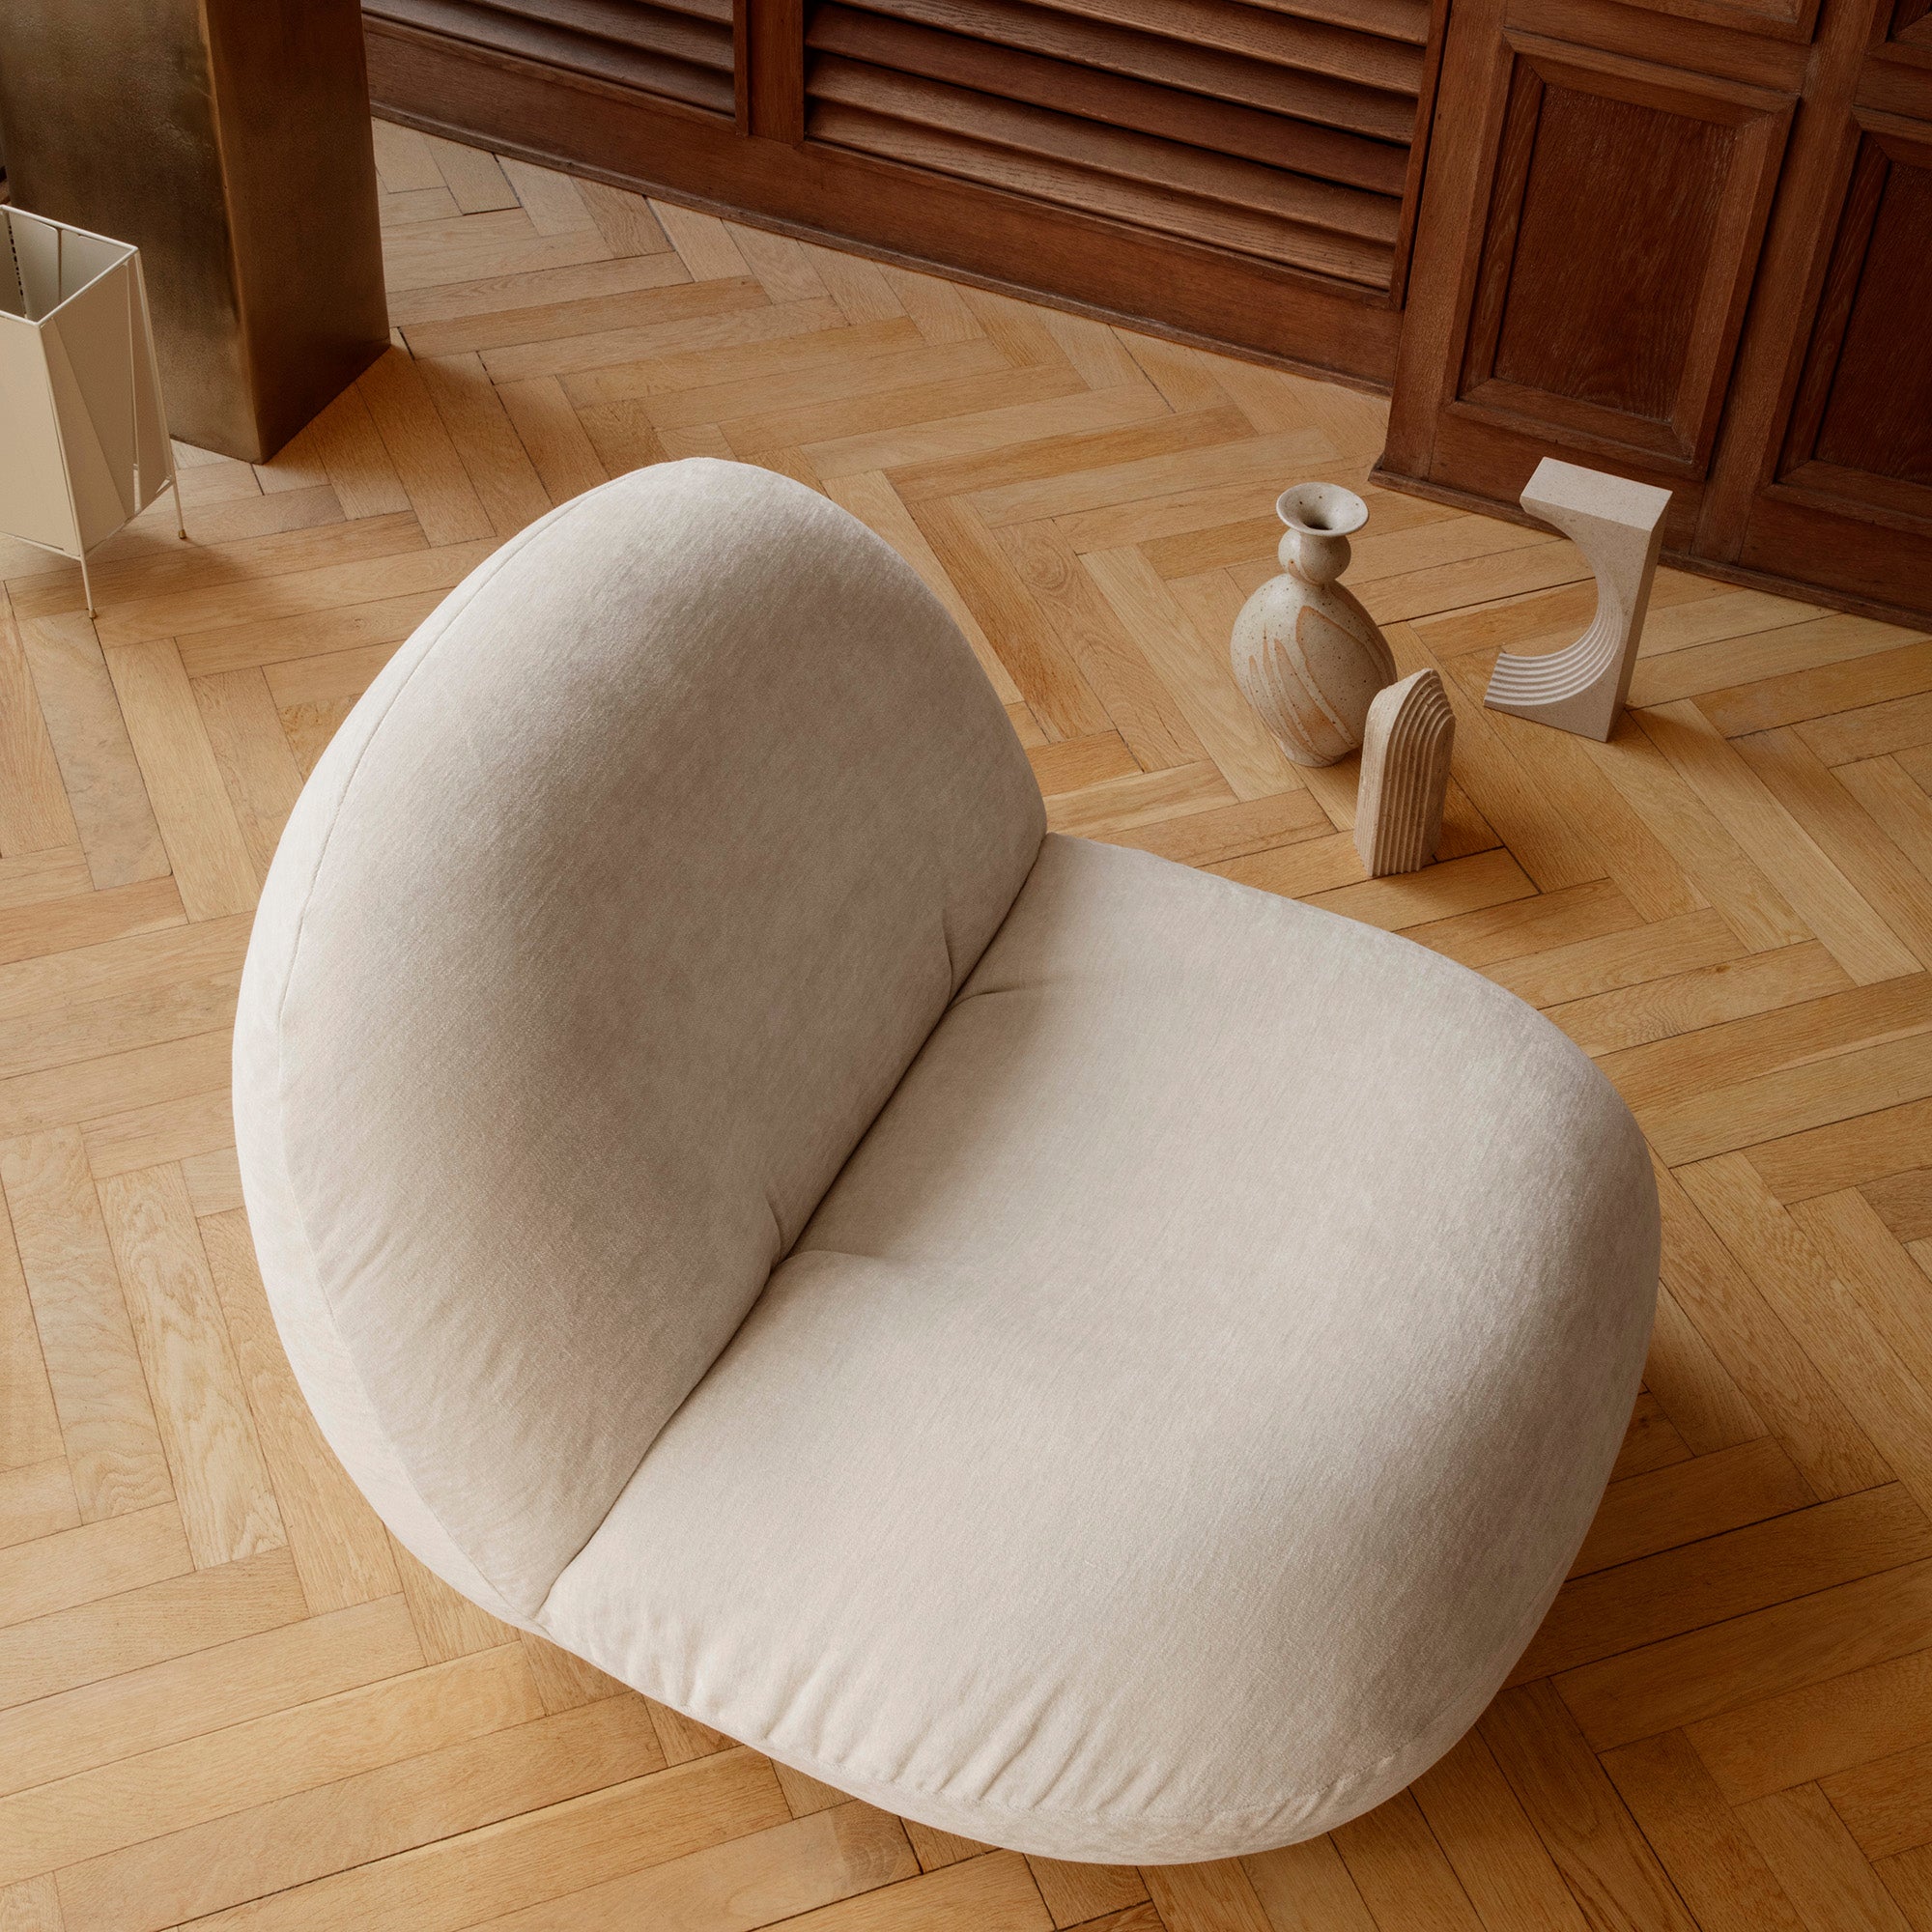 Pacha Lounge Chair bază rotativă